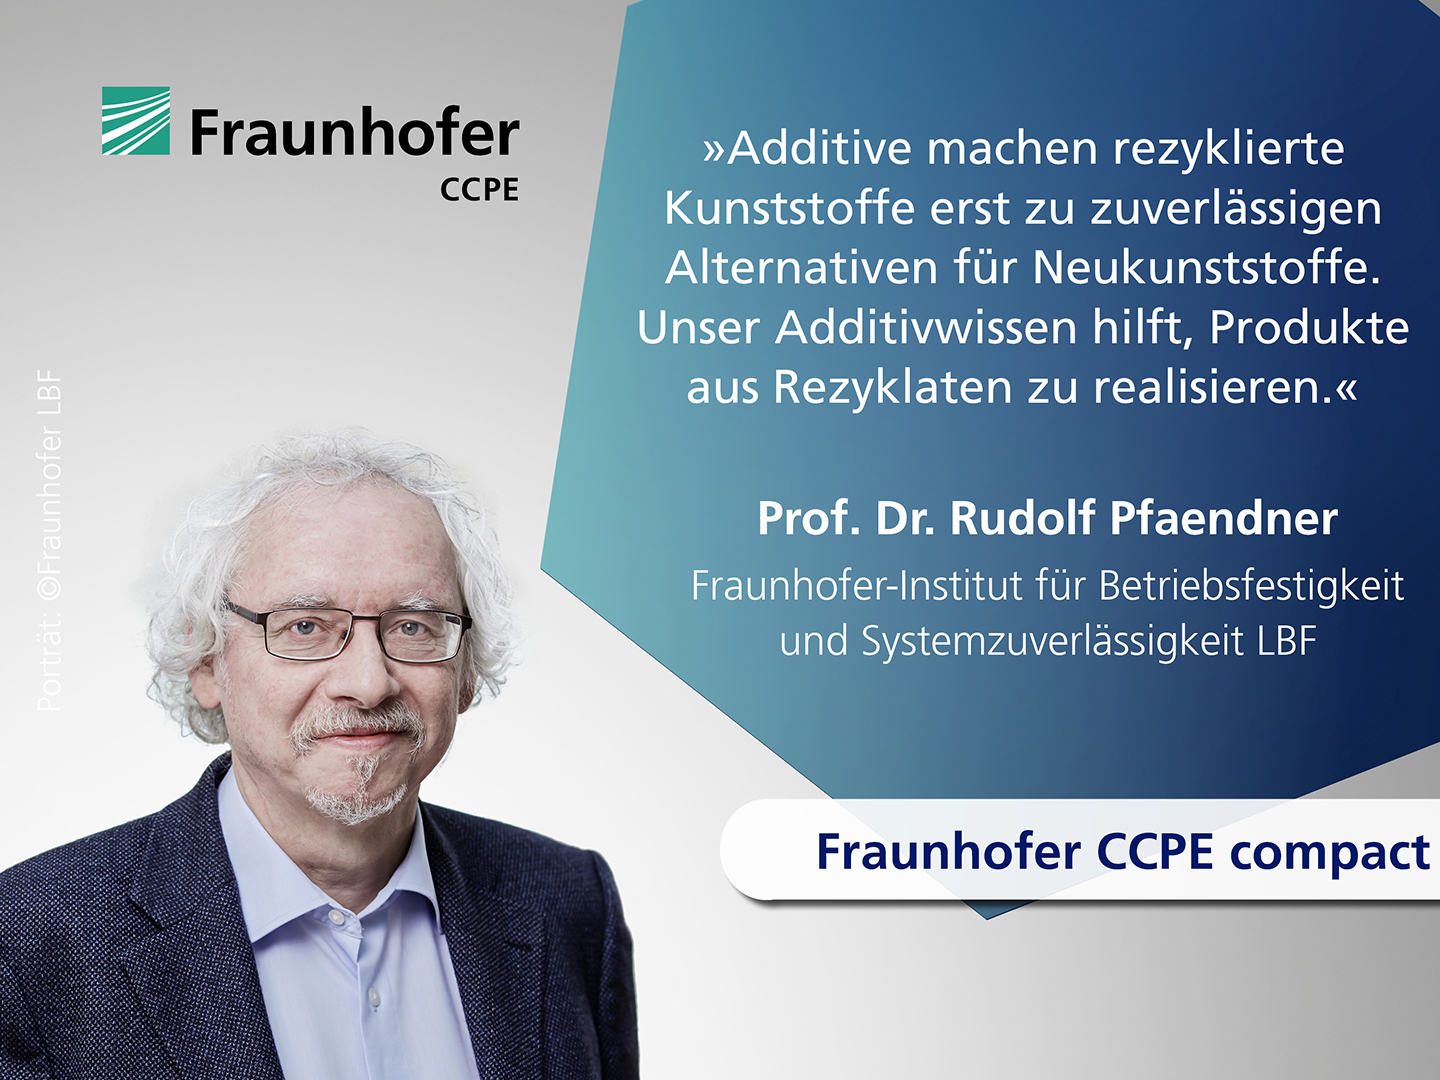 Prof. Dr. Rudolf Pfaendner